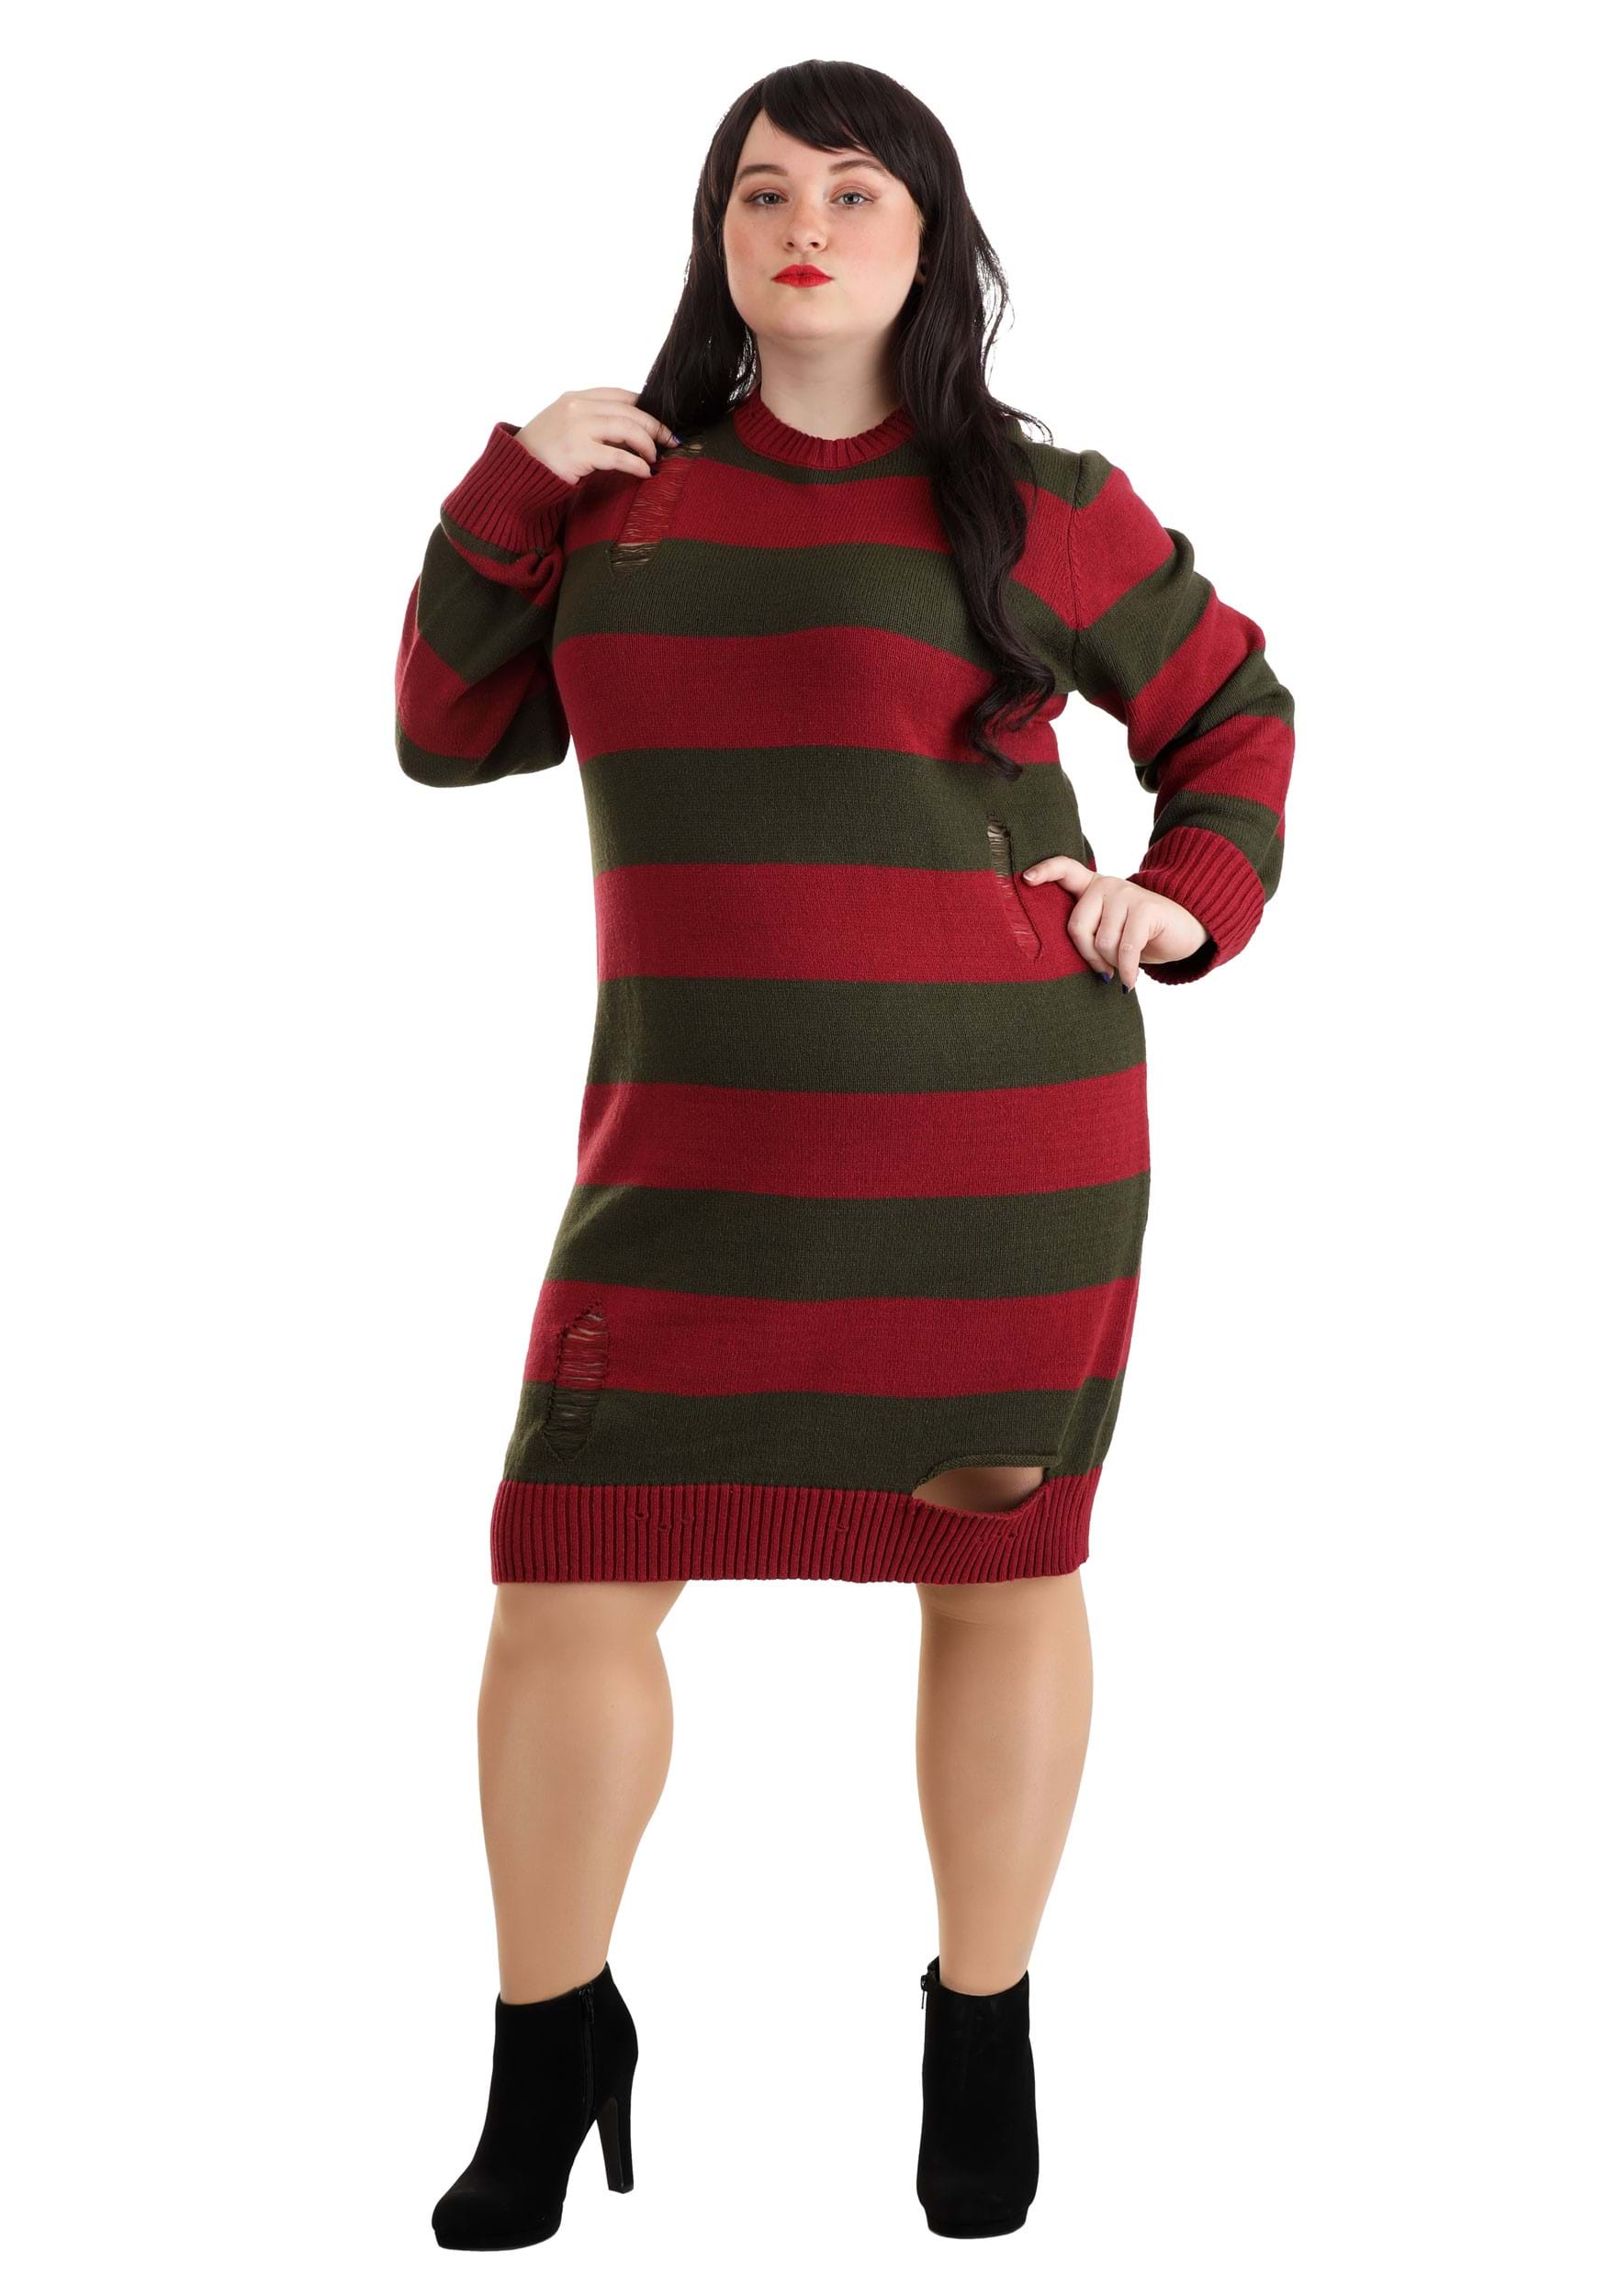 Plus Size Freddy Krueger Women's Costume Dress , Horror Movie Costumes